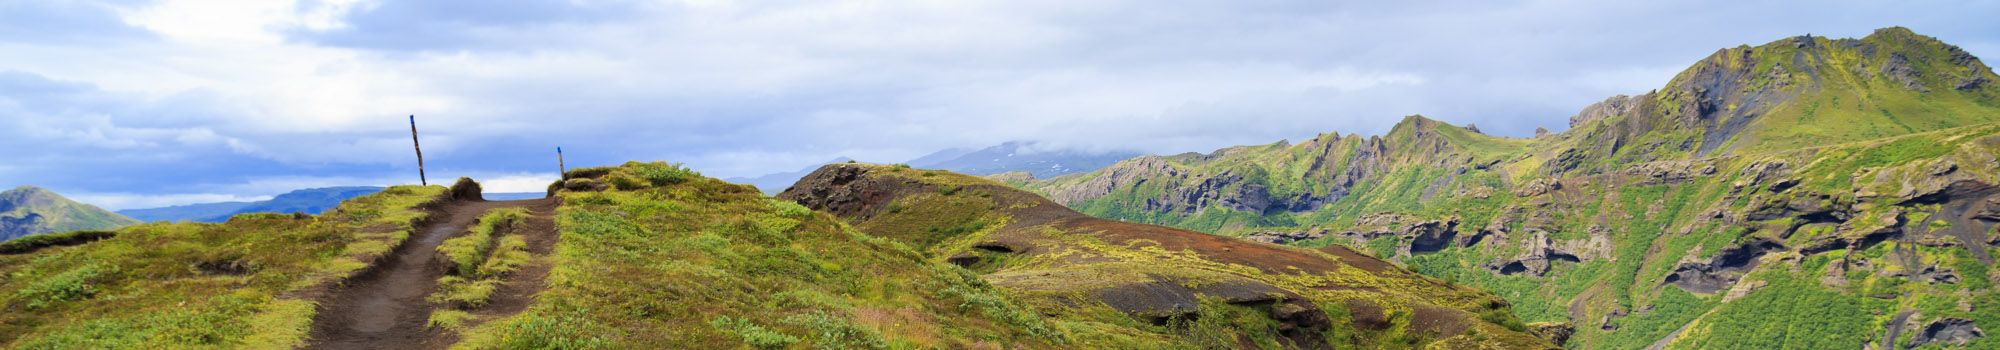 Thorsmork-Laugavegur-Volcano-Glacier-views-Iceland